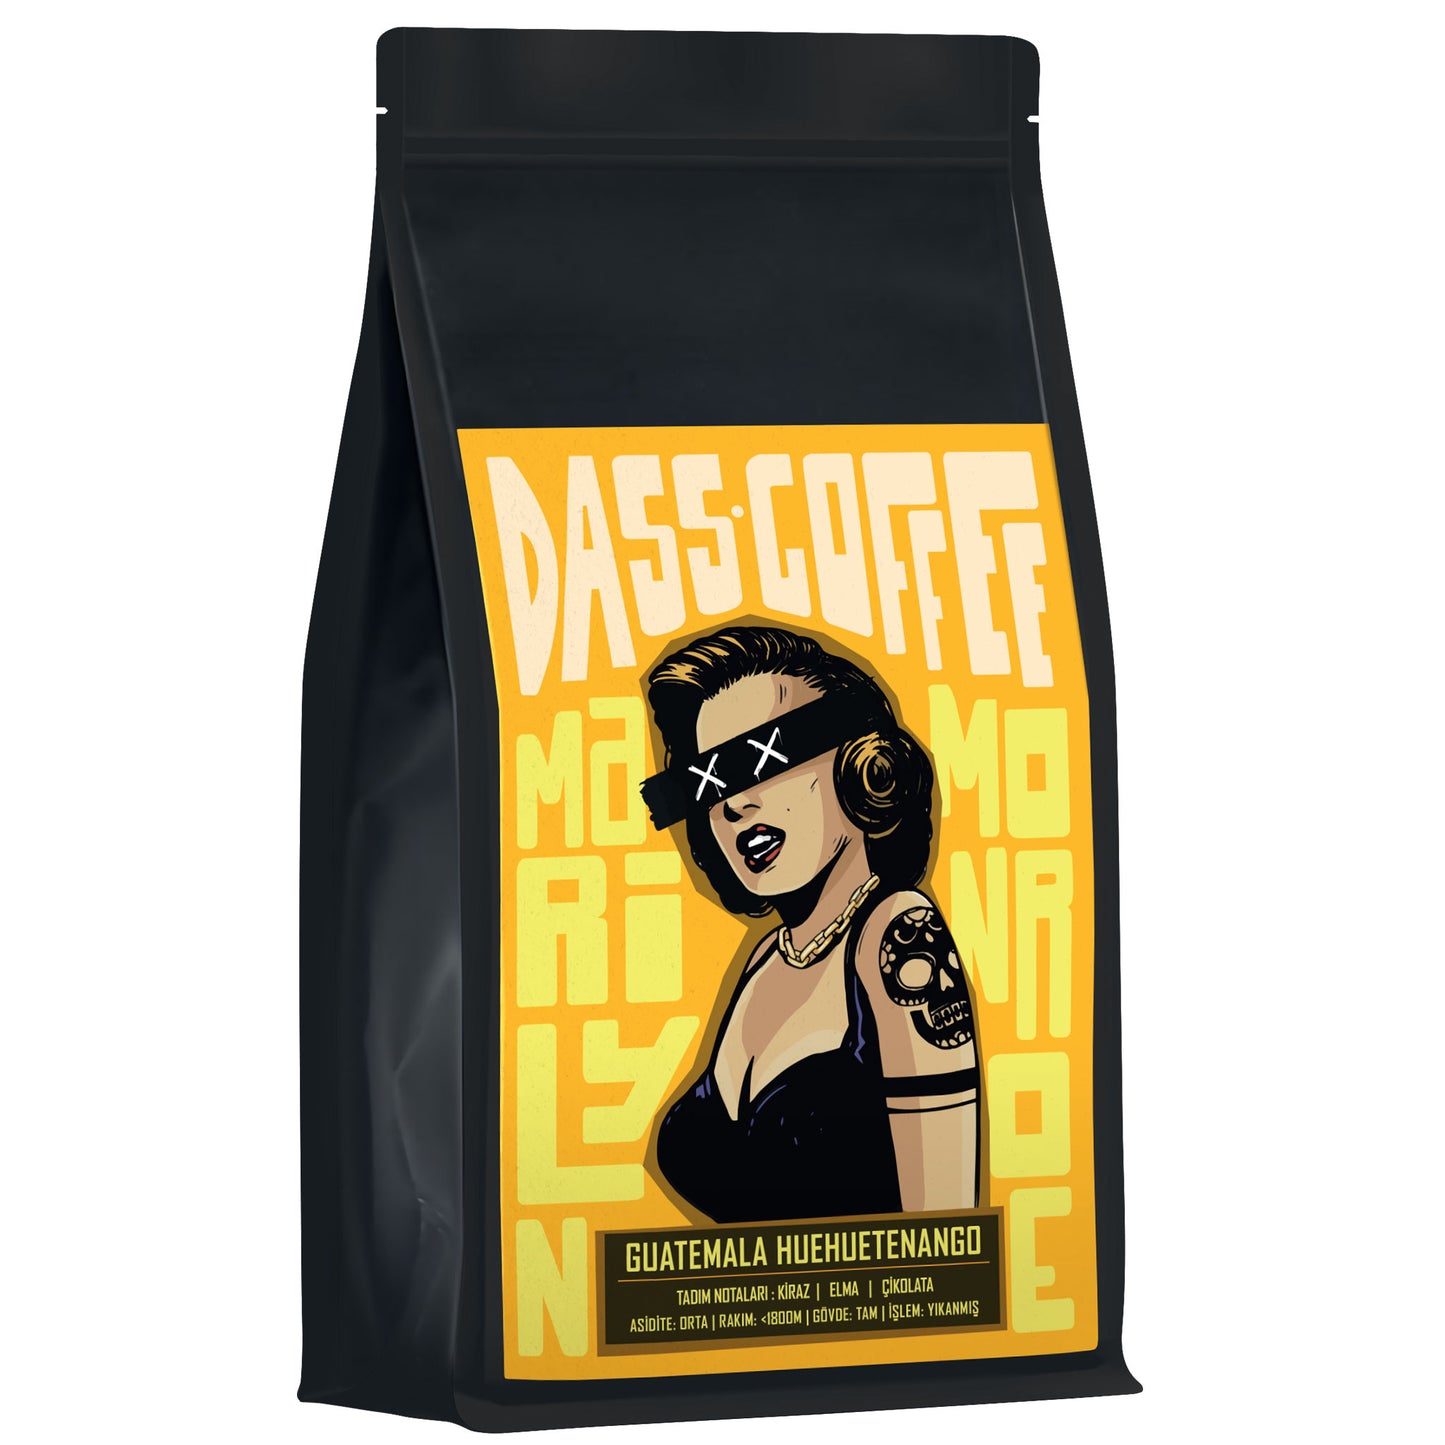 Dass Coffee Guatemala Huehuetenango Yöresel Filtre Kahve - 250gr